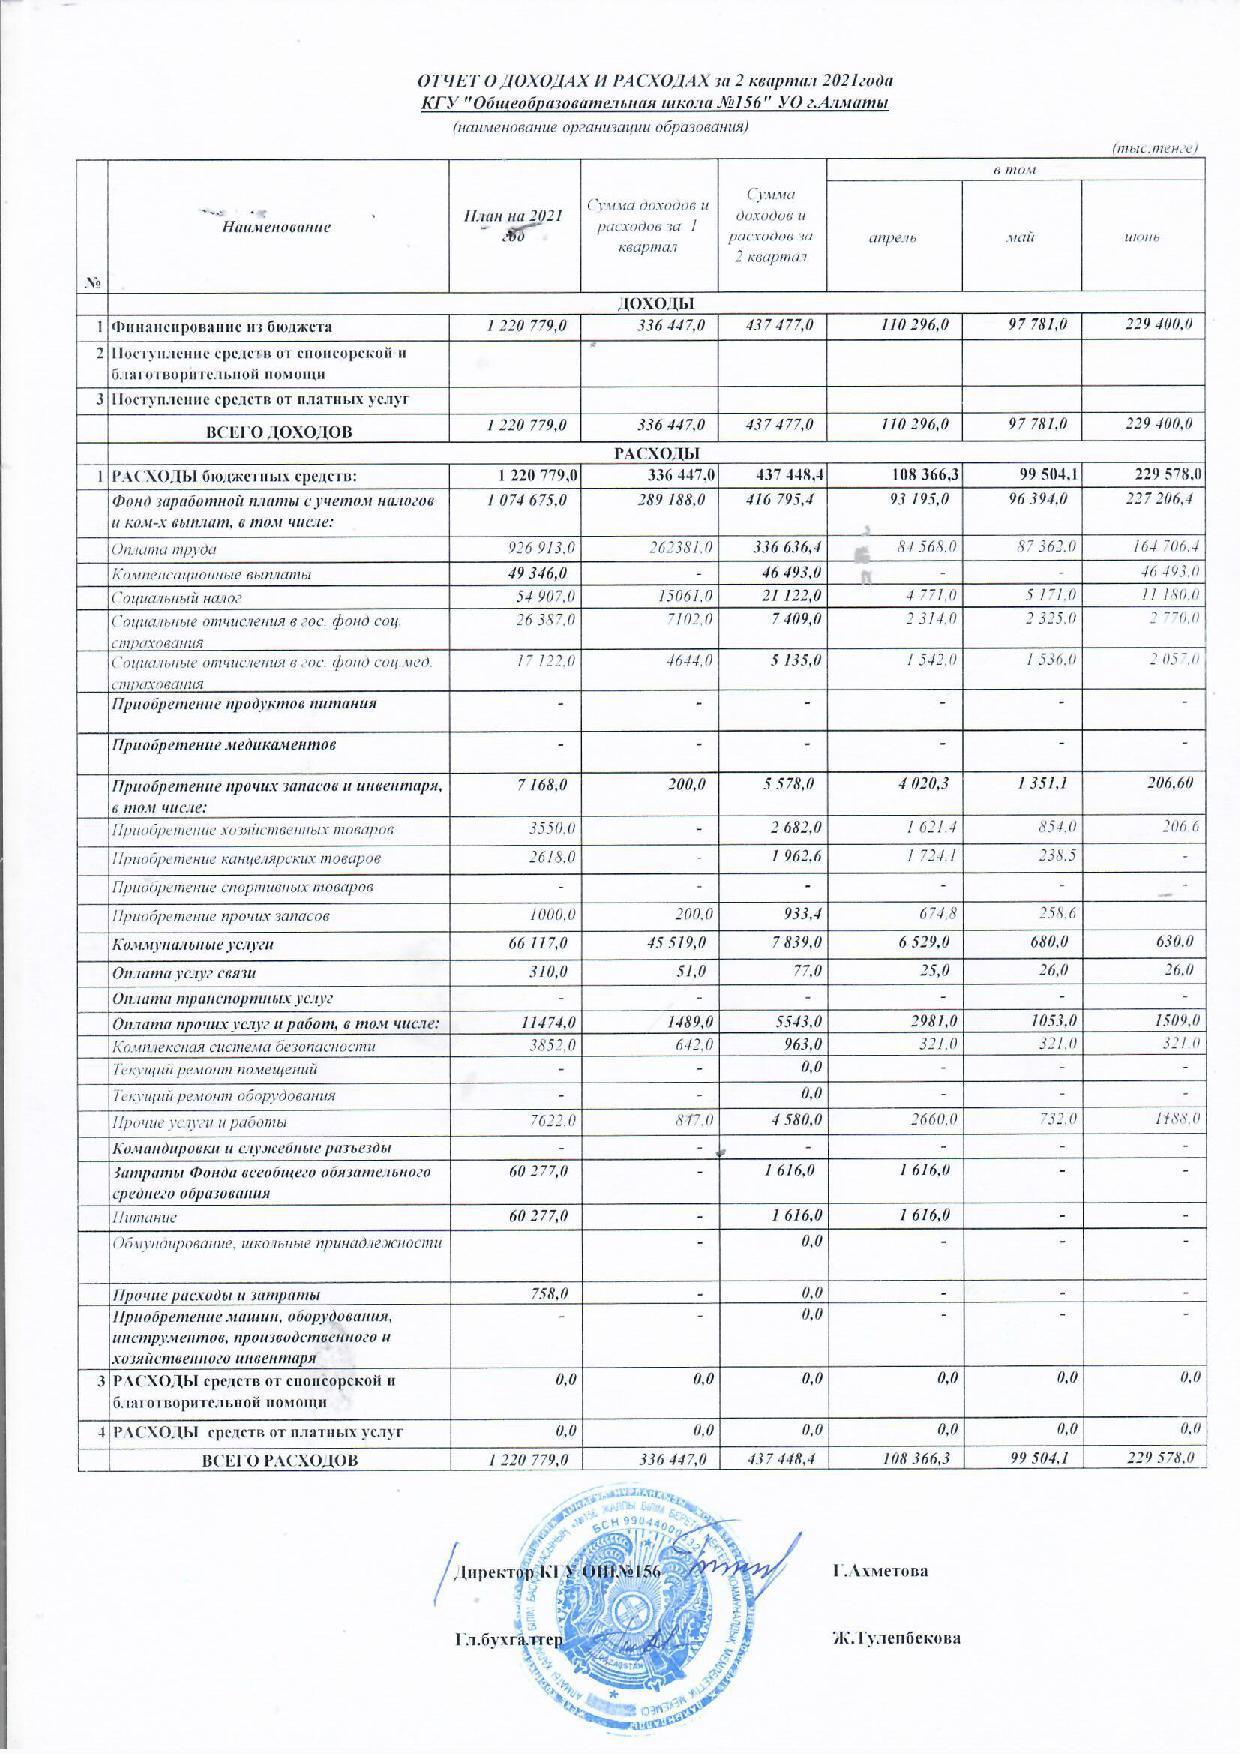 Отчет о доходах и расходах за 2 кв 2021